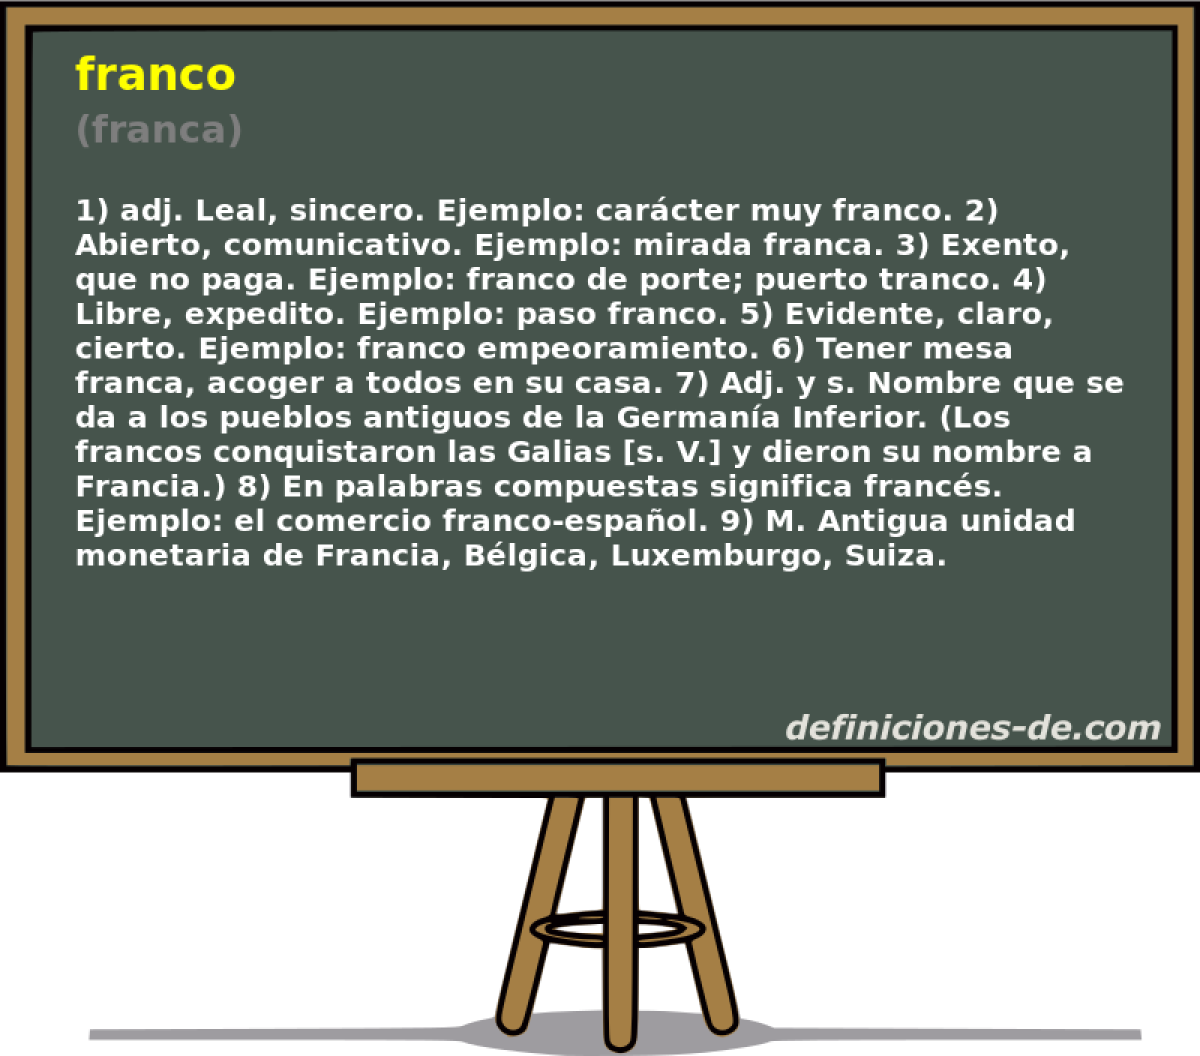 franco (franca)